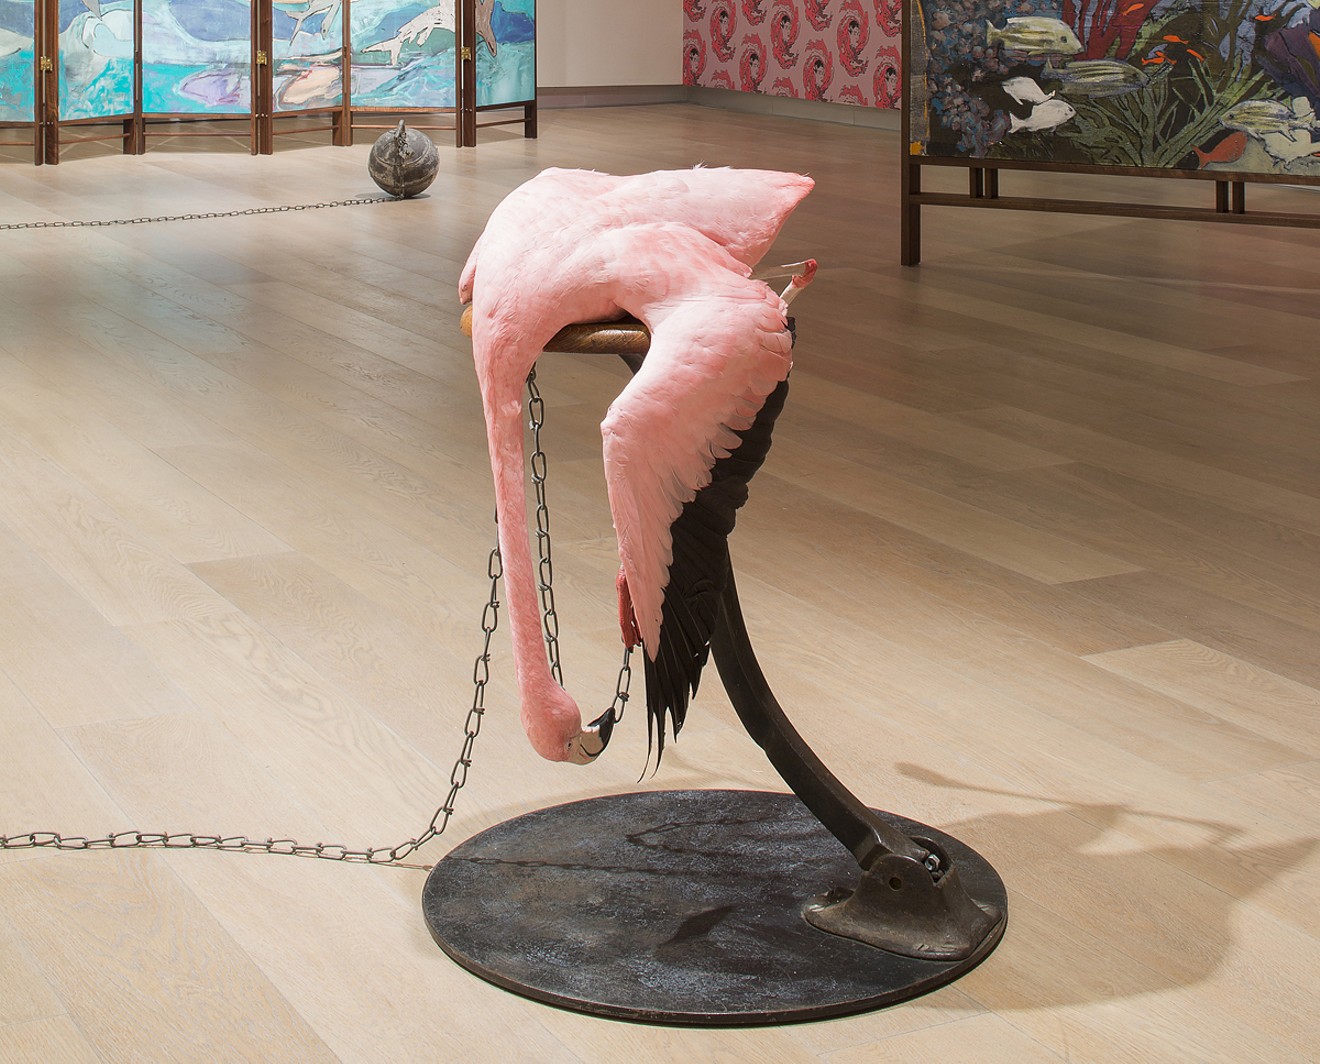 Hernan Bas' flamingo sculpture in "Florida Living."